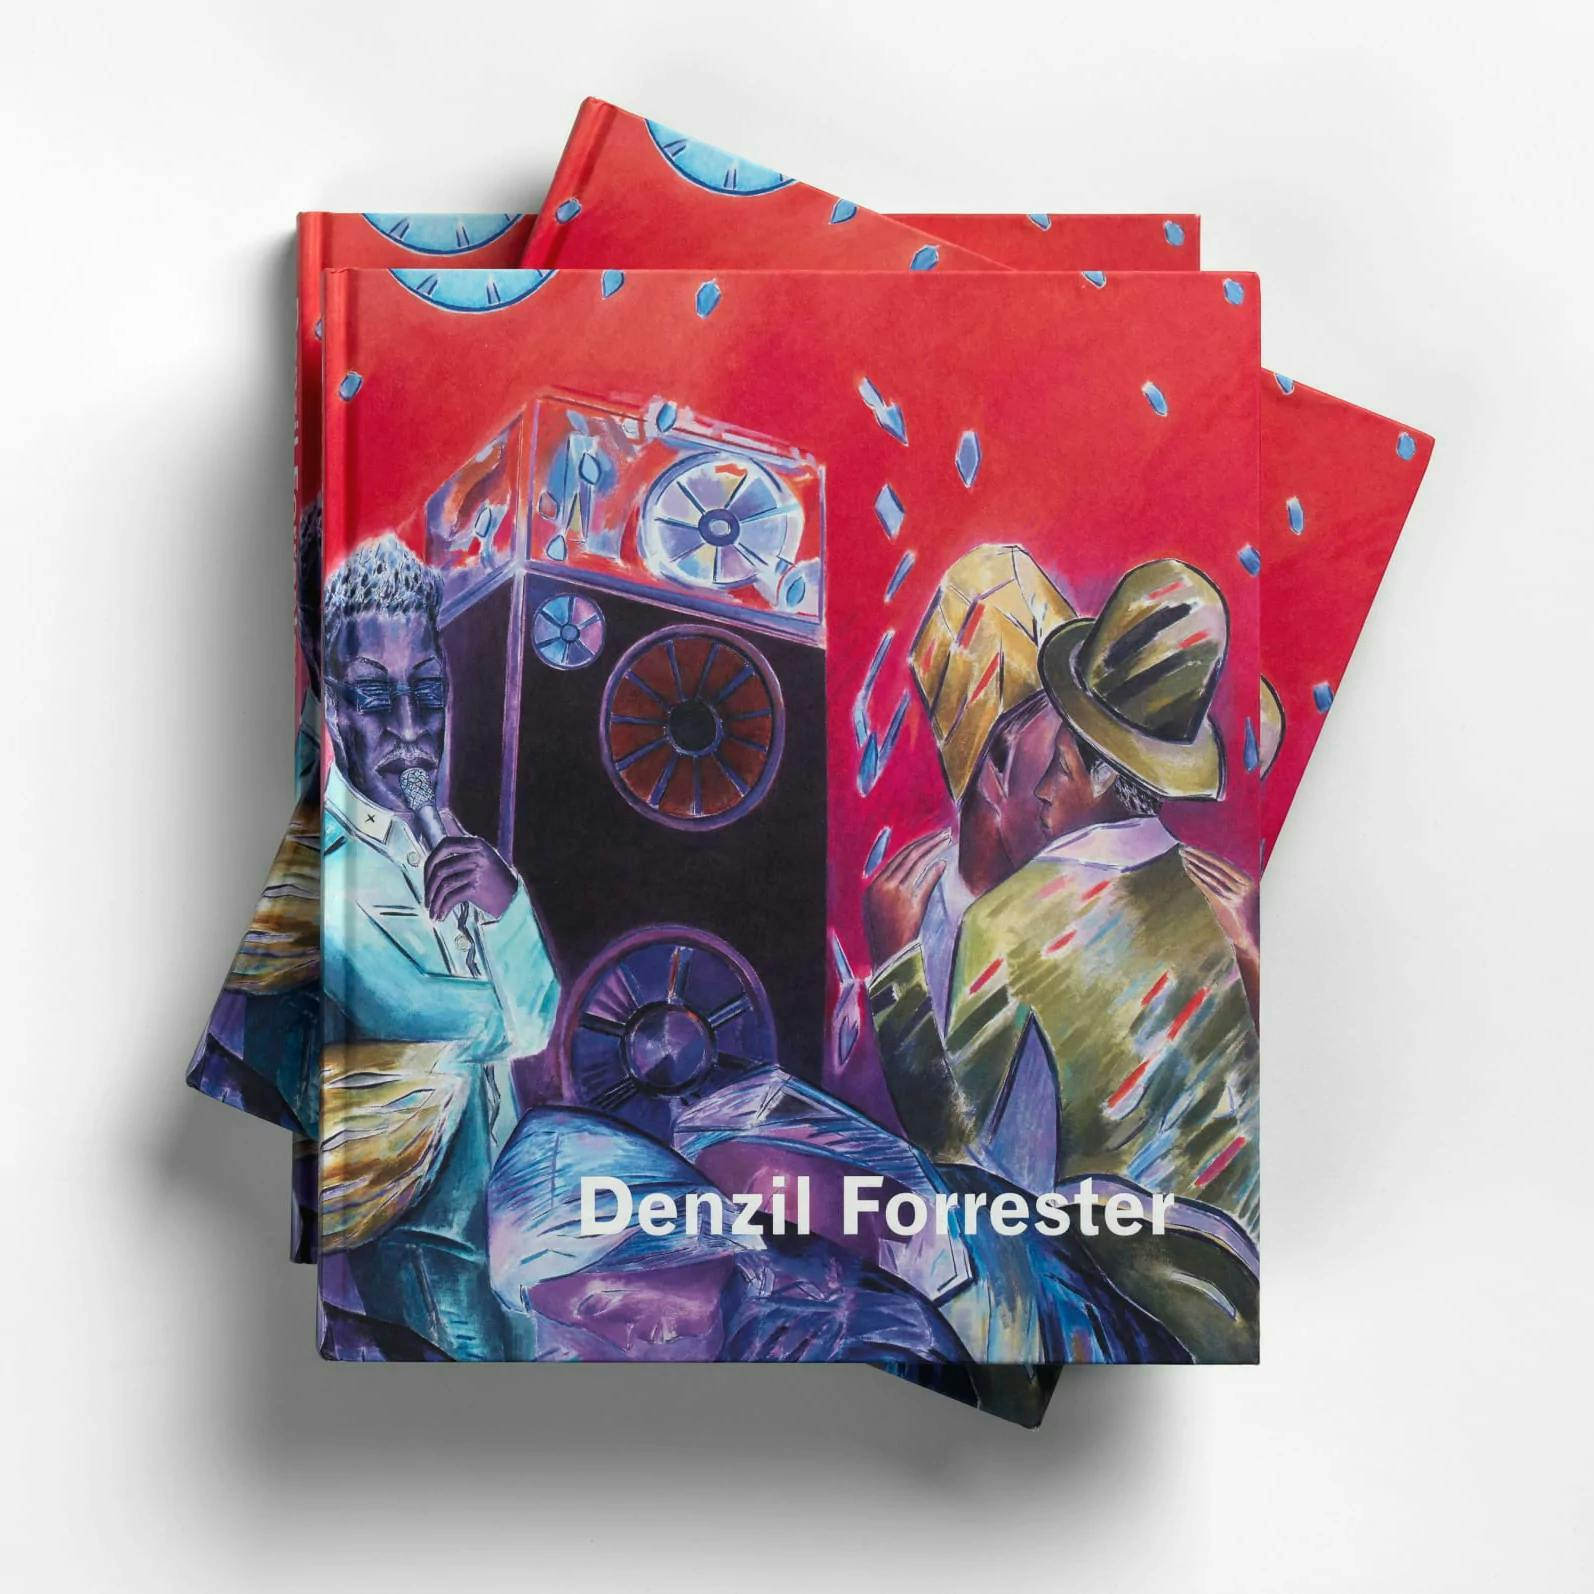 Stack of books titled "Denzil Forrester"